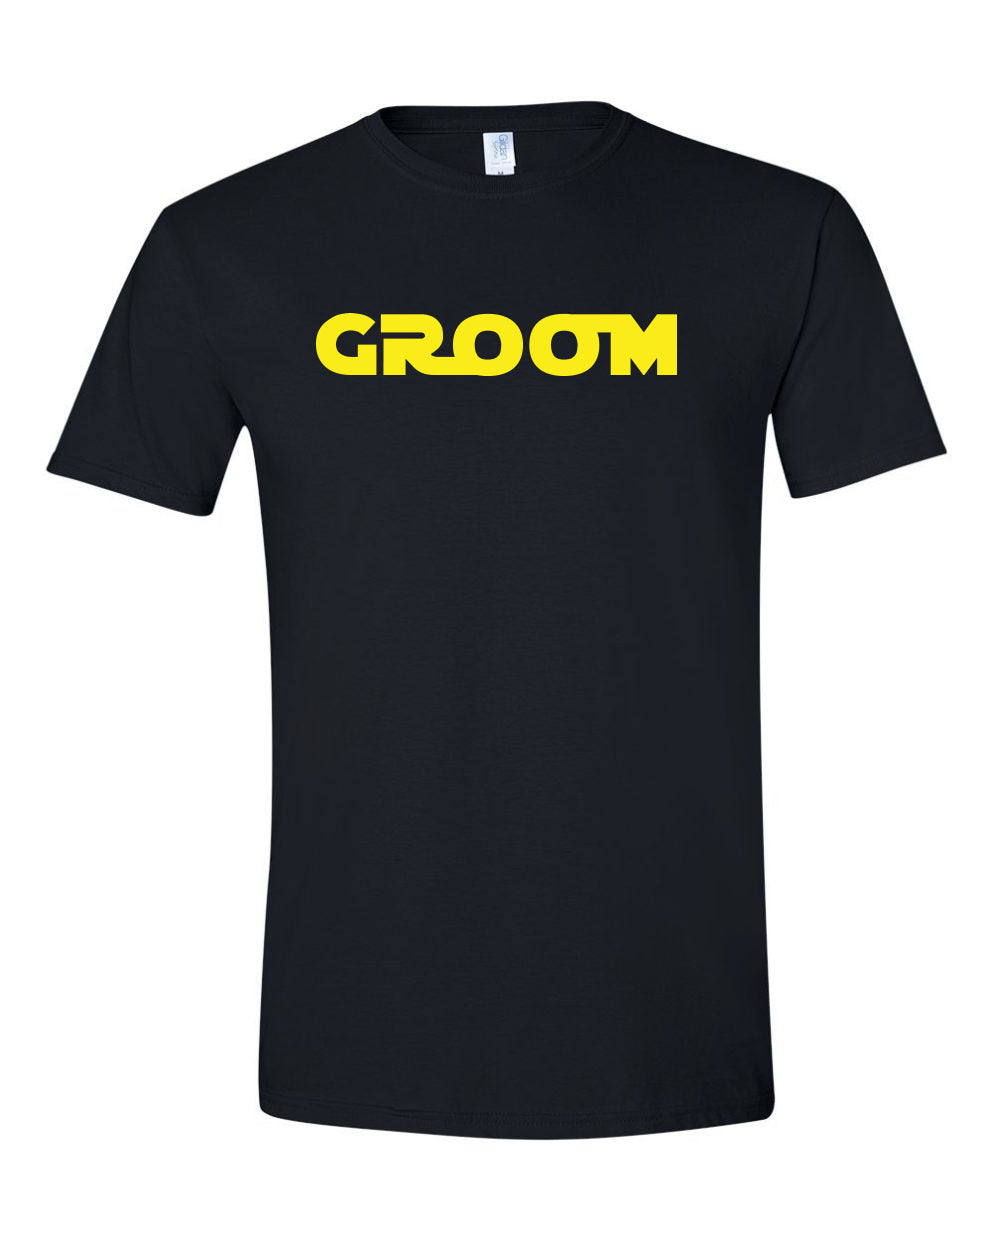 Groom Star Wars T-shirt